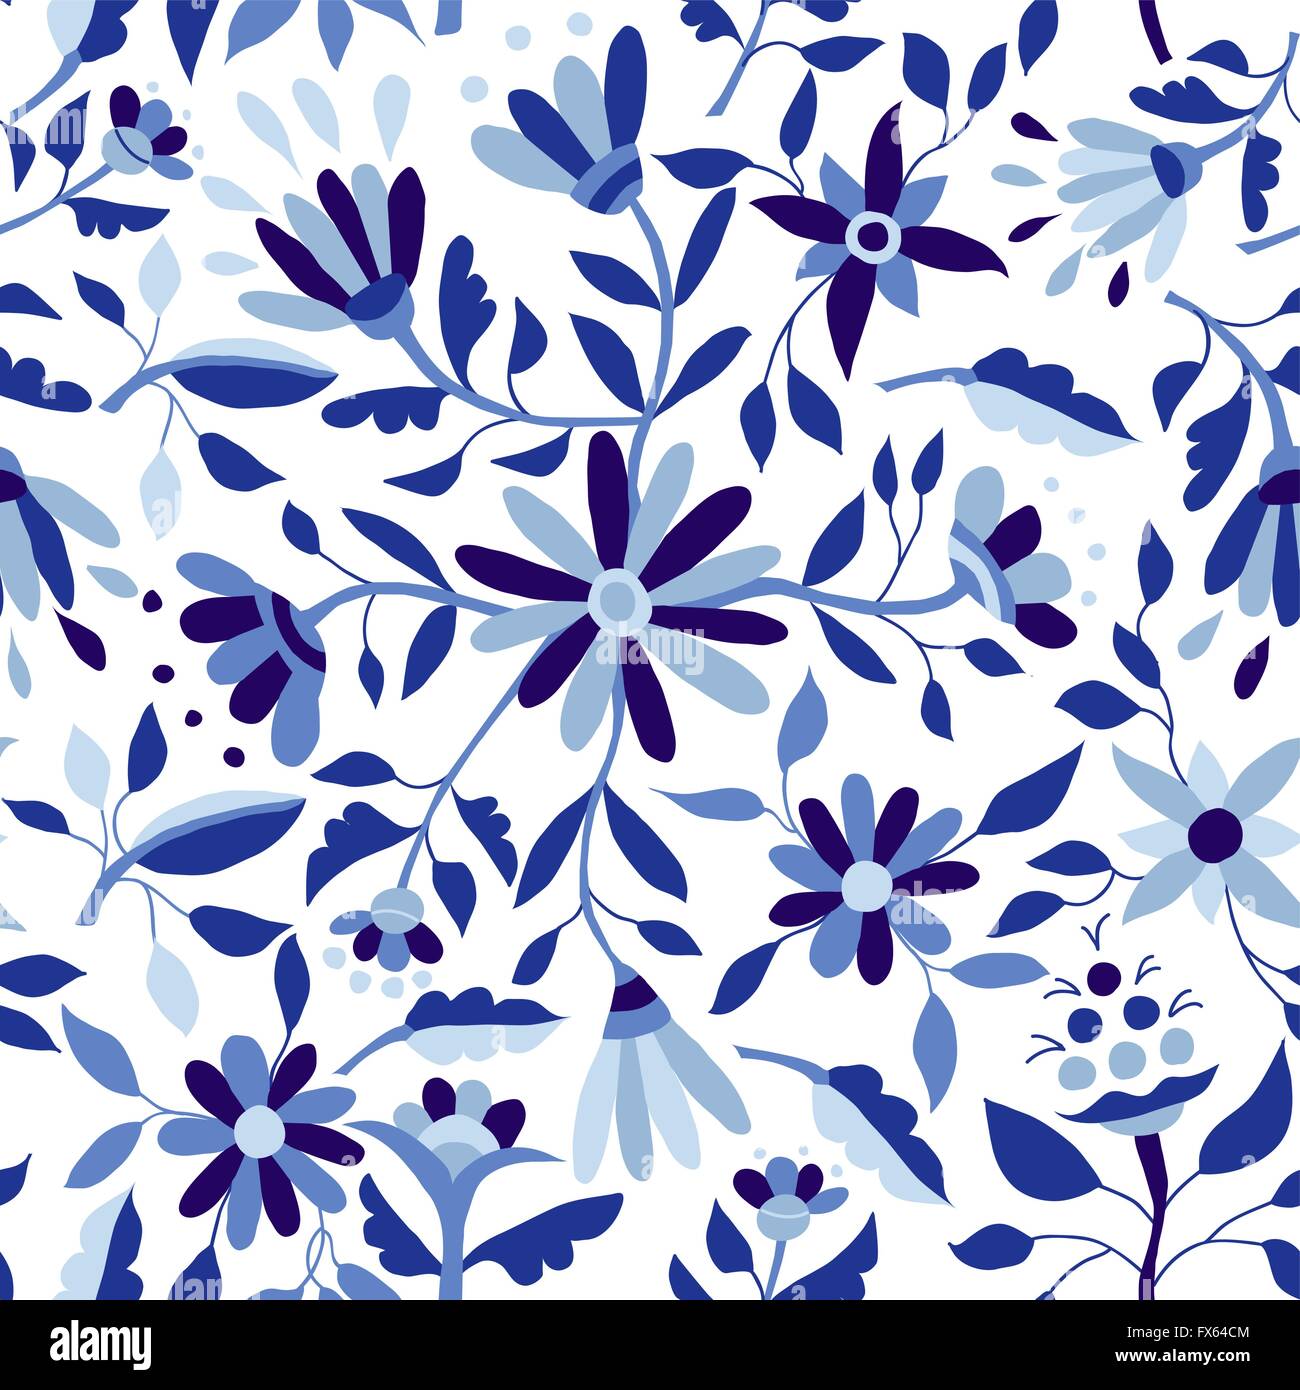 Blue indigo color seamless pattern with vintage flower illustrations, spring time season floral background art. EPS10 vector. Stock Vector